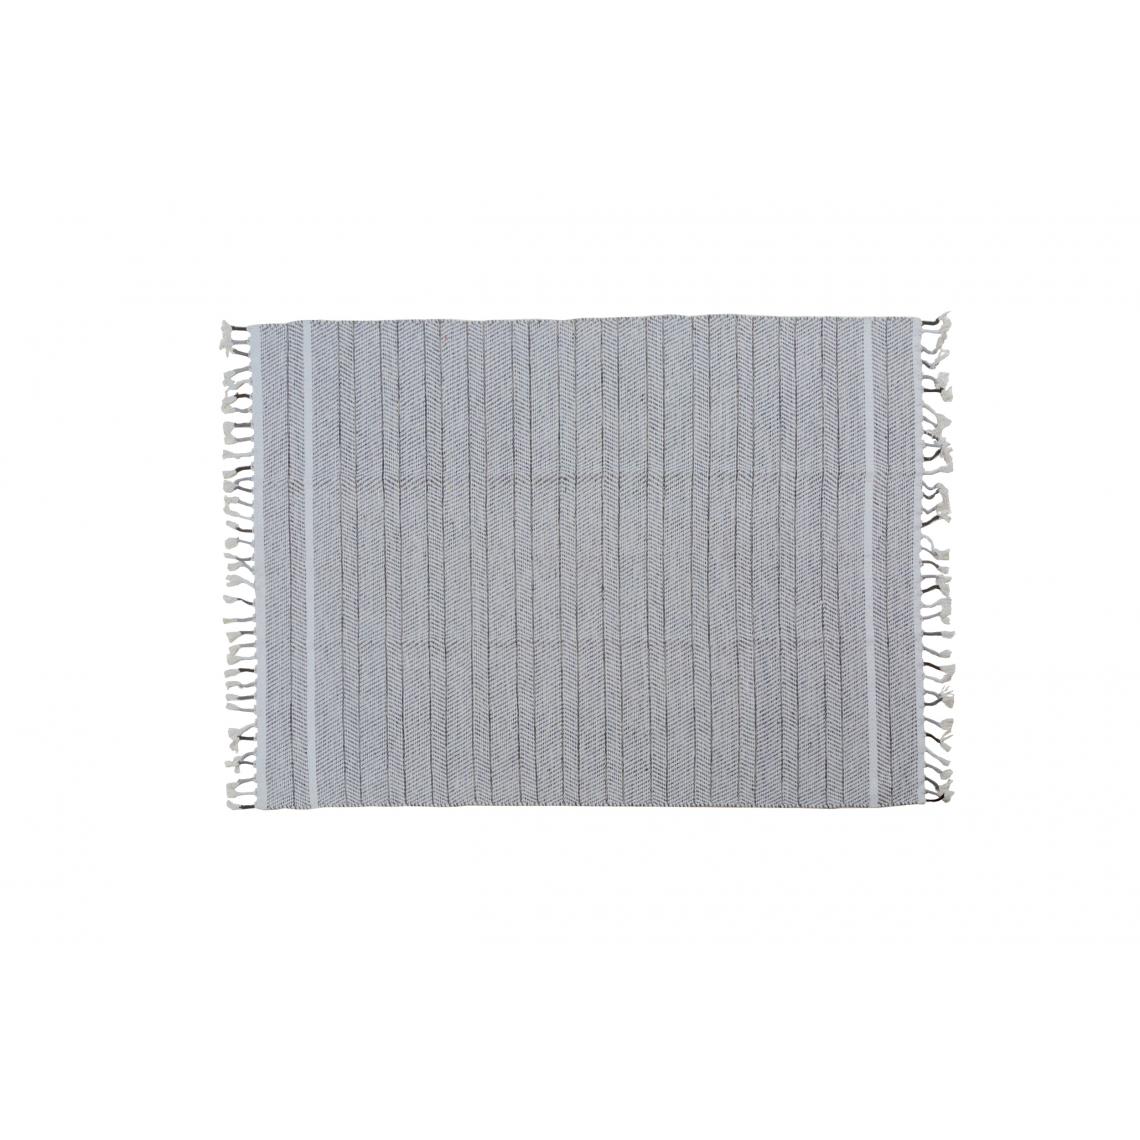 Alter - Tapis moderne Alabama, style kilim, 100% coton, gris, 230x160cm - Tapis